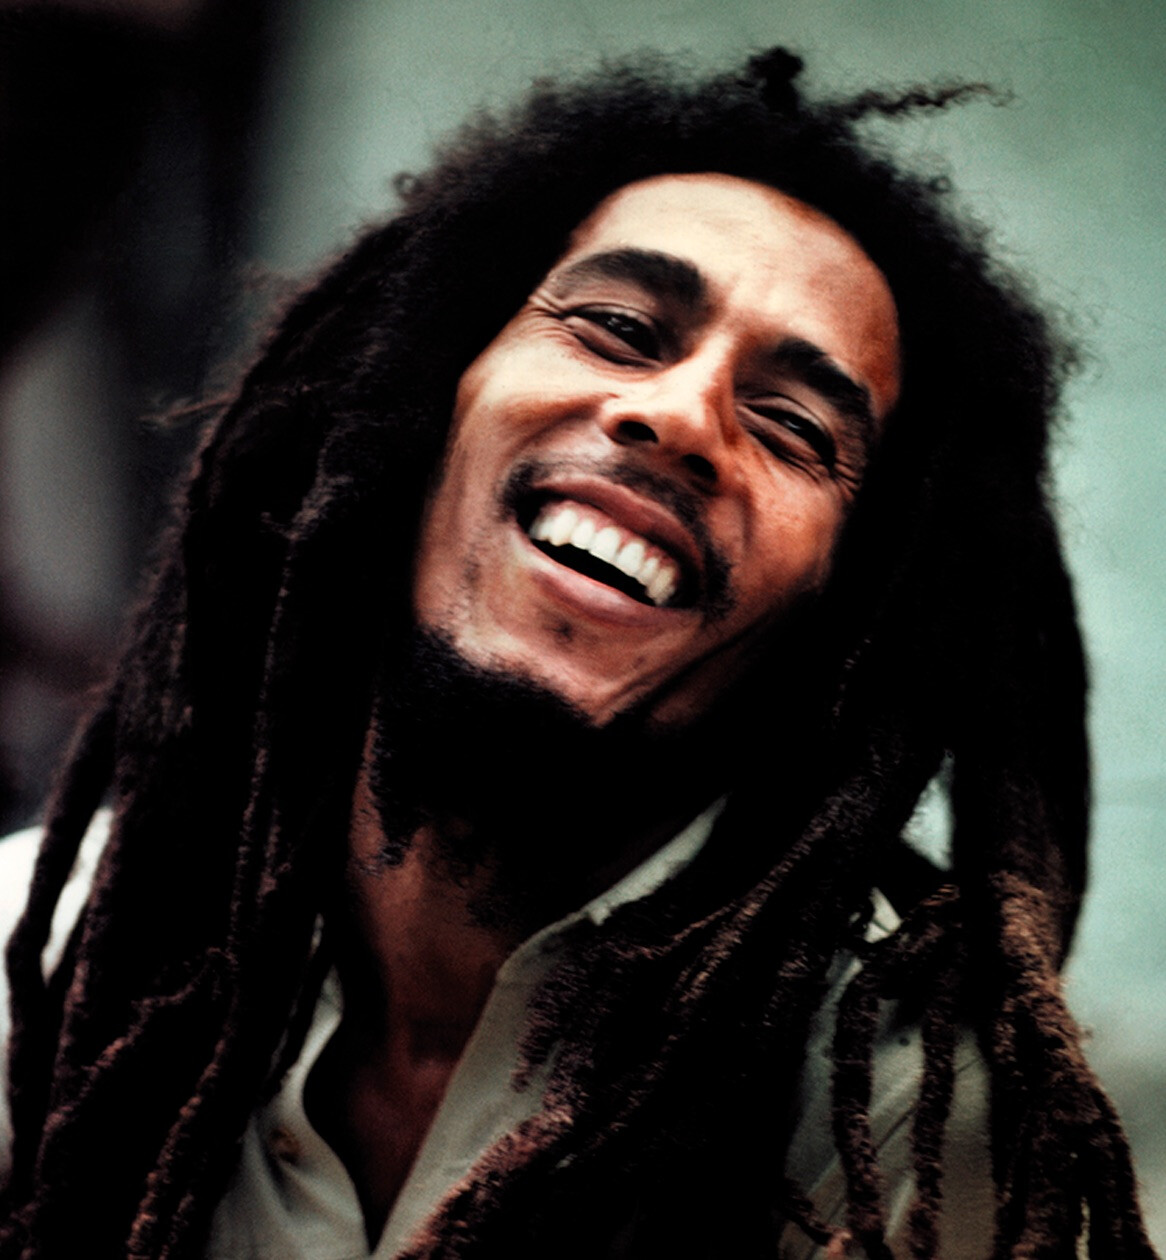 Photograph of Bob Marley.